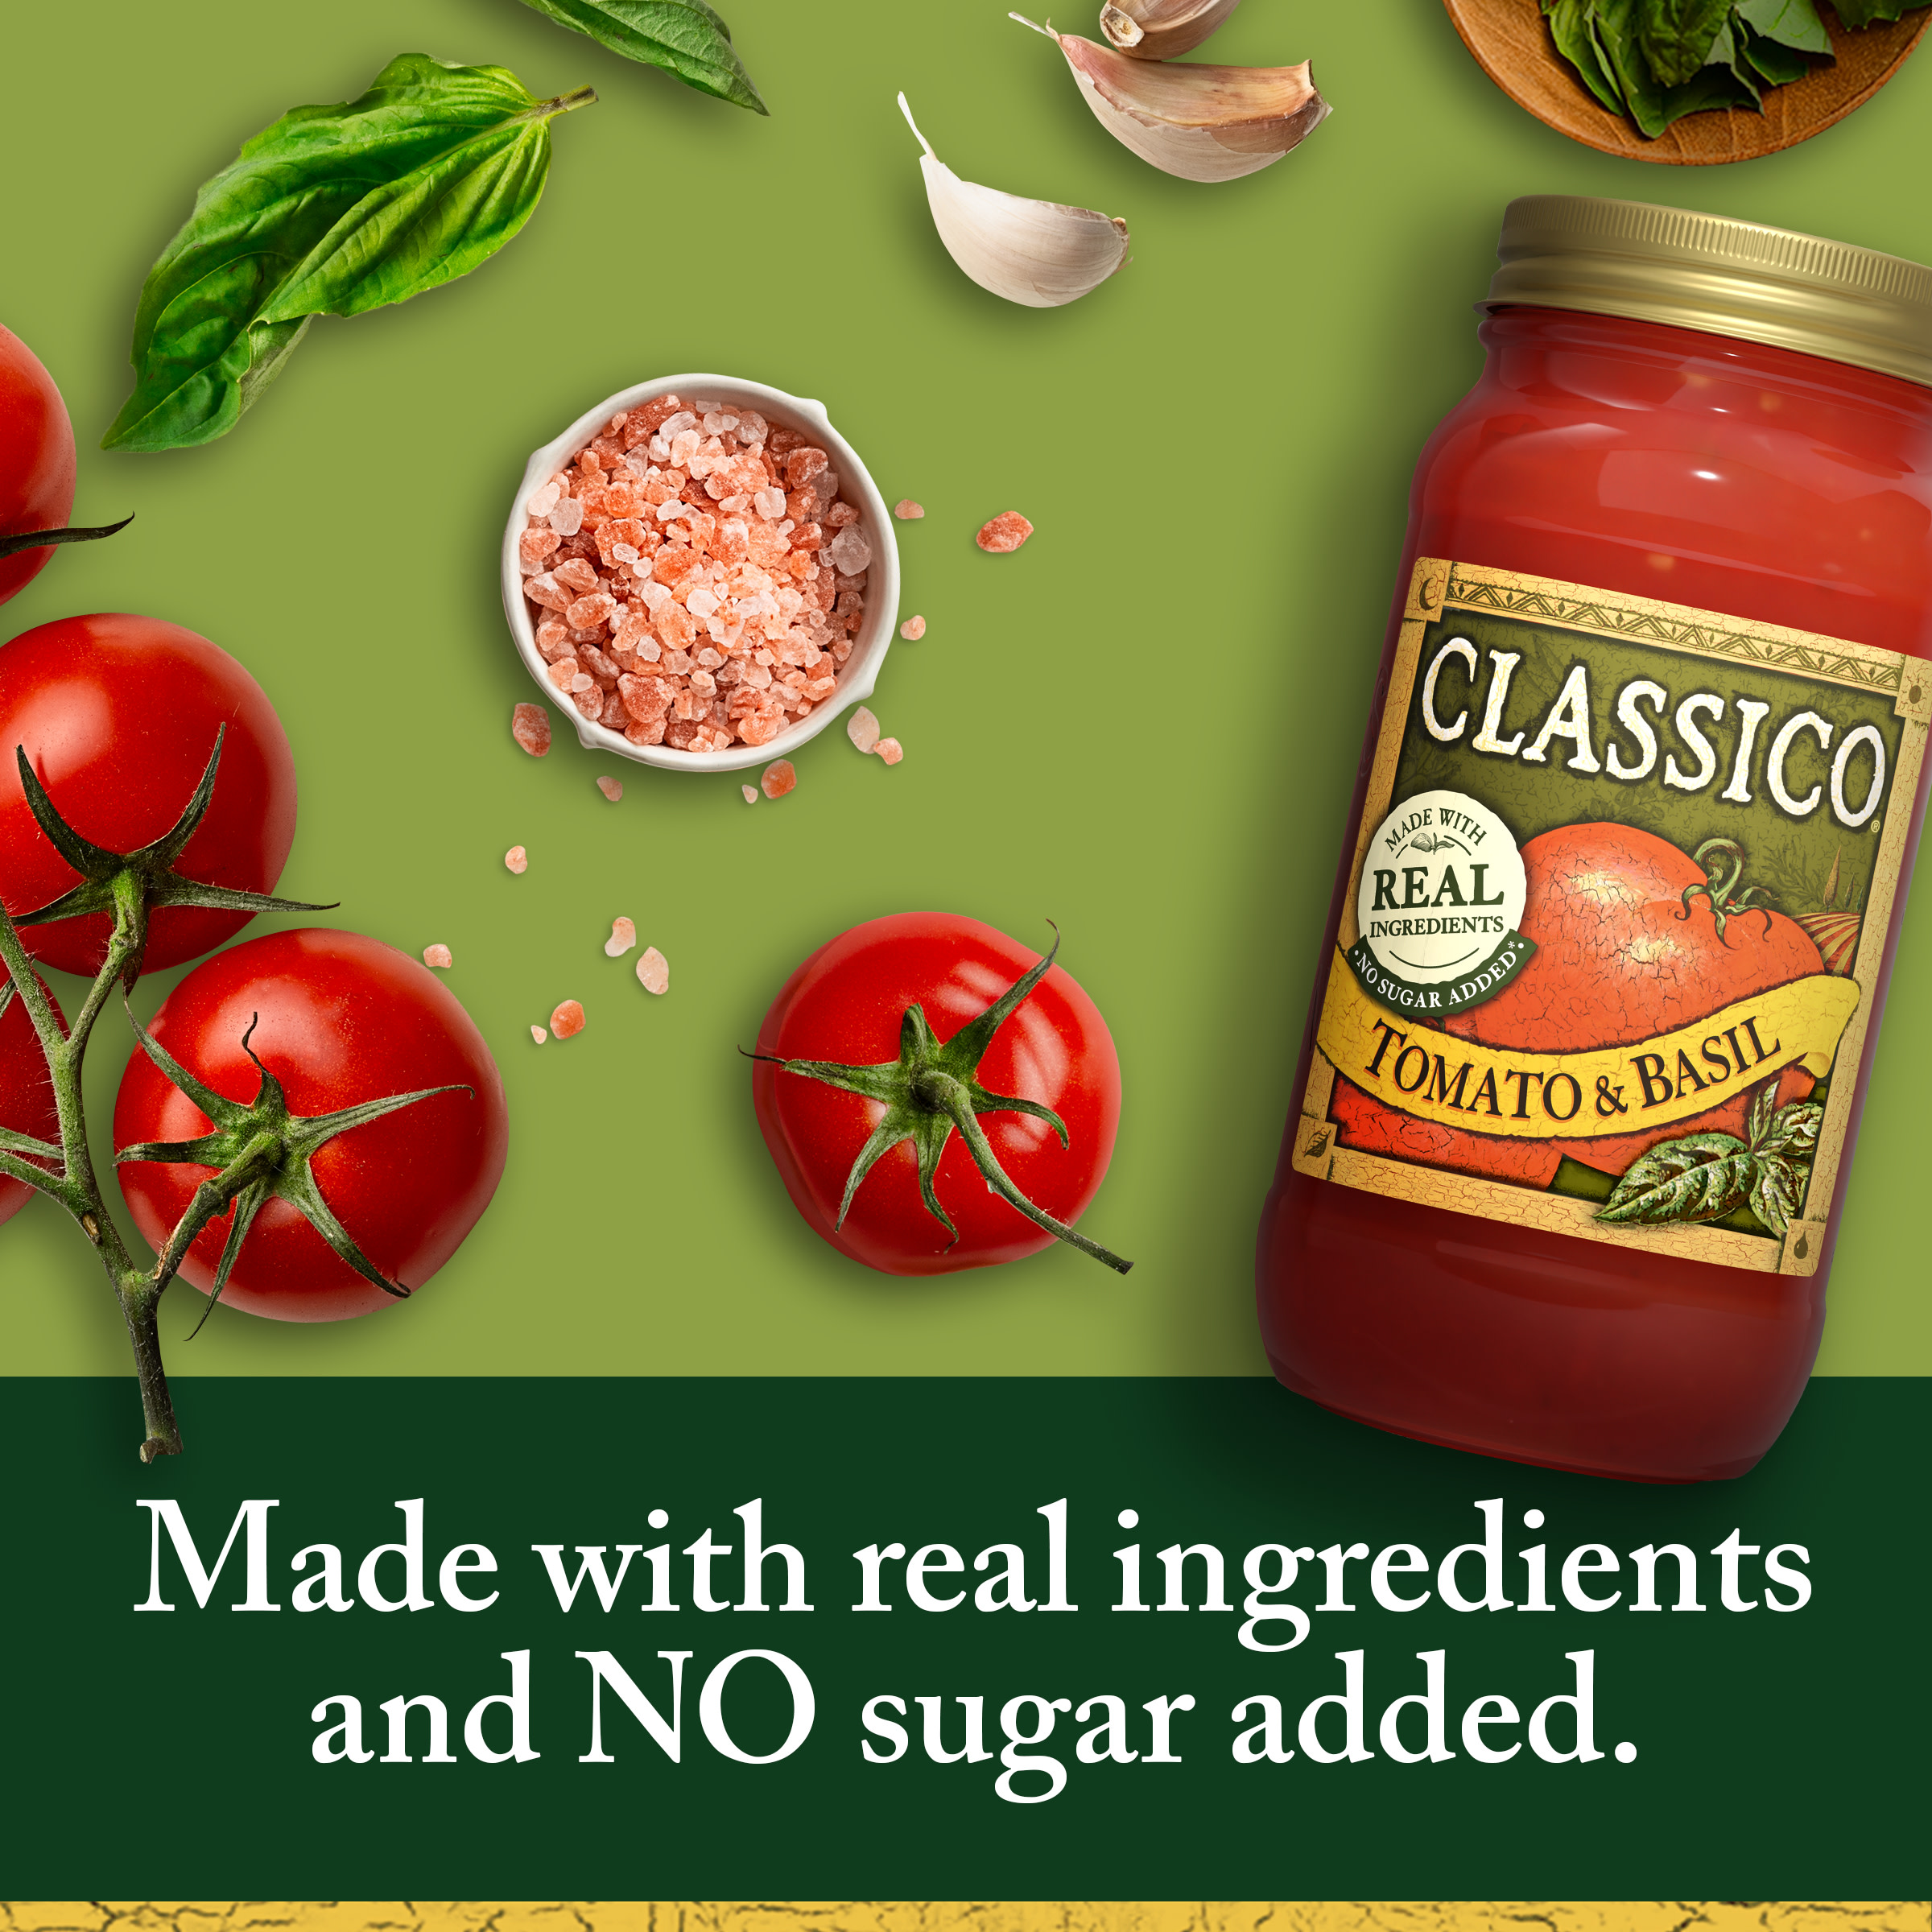 Classico Tomato & Basil Spaghetti Pasta Sauce, 24 oz. Jar - image 3 of 18